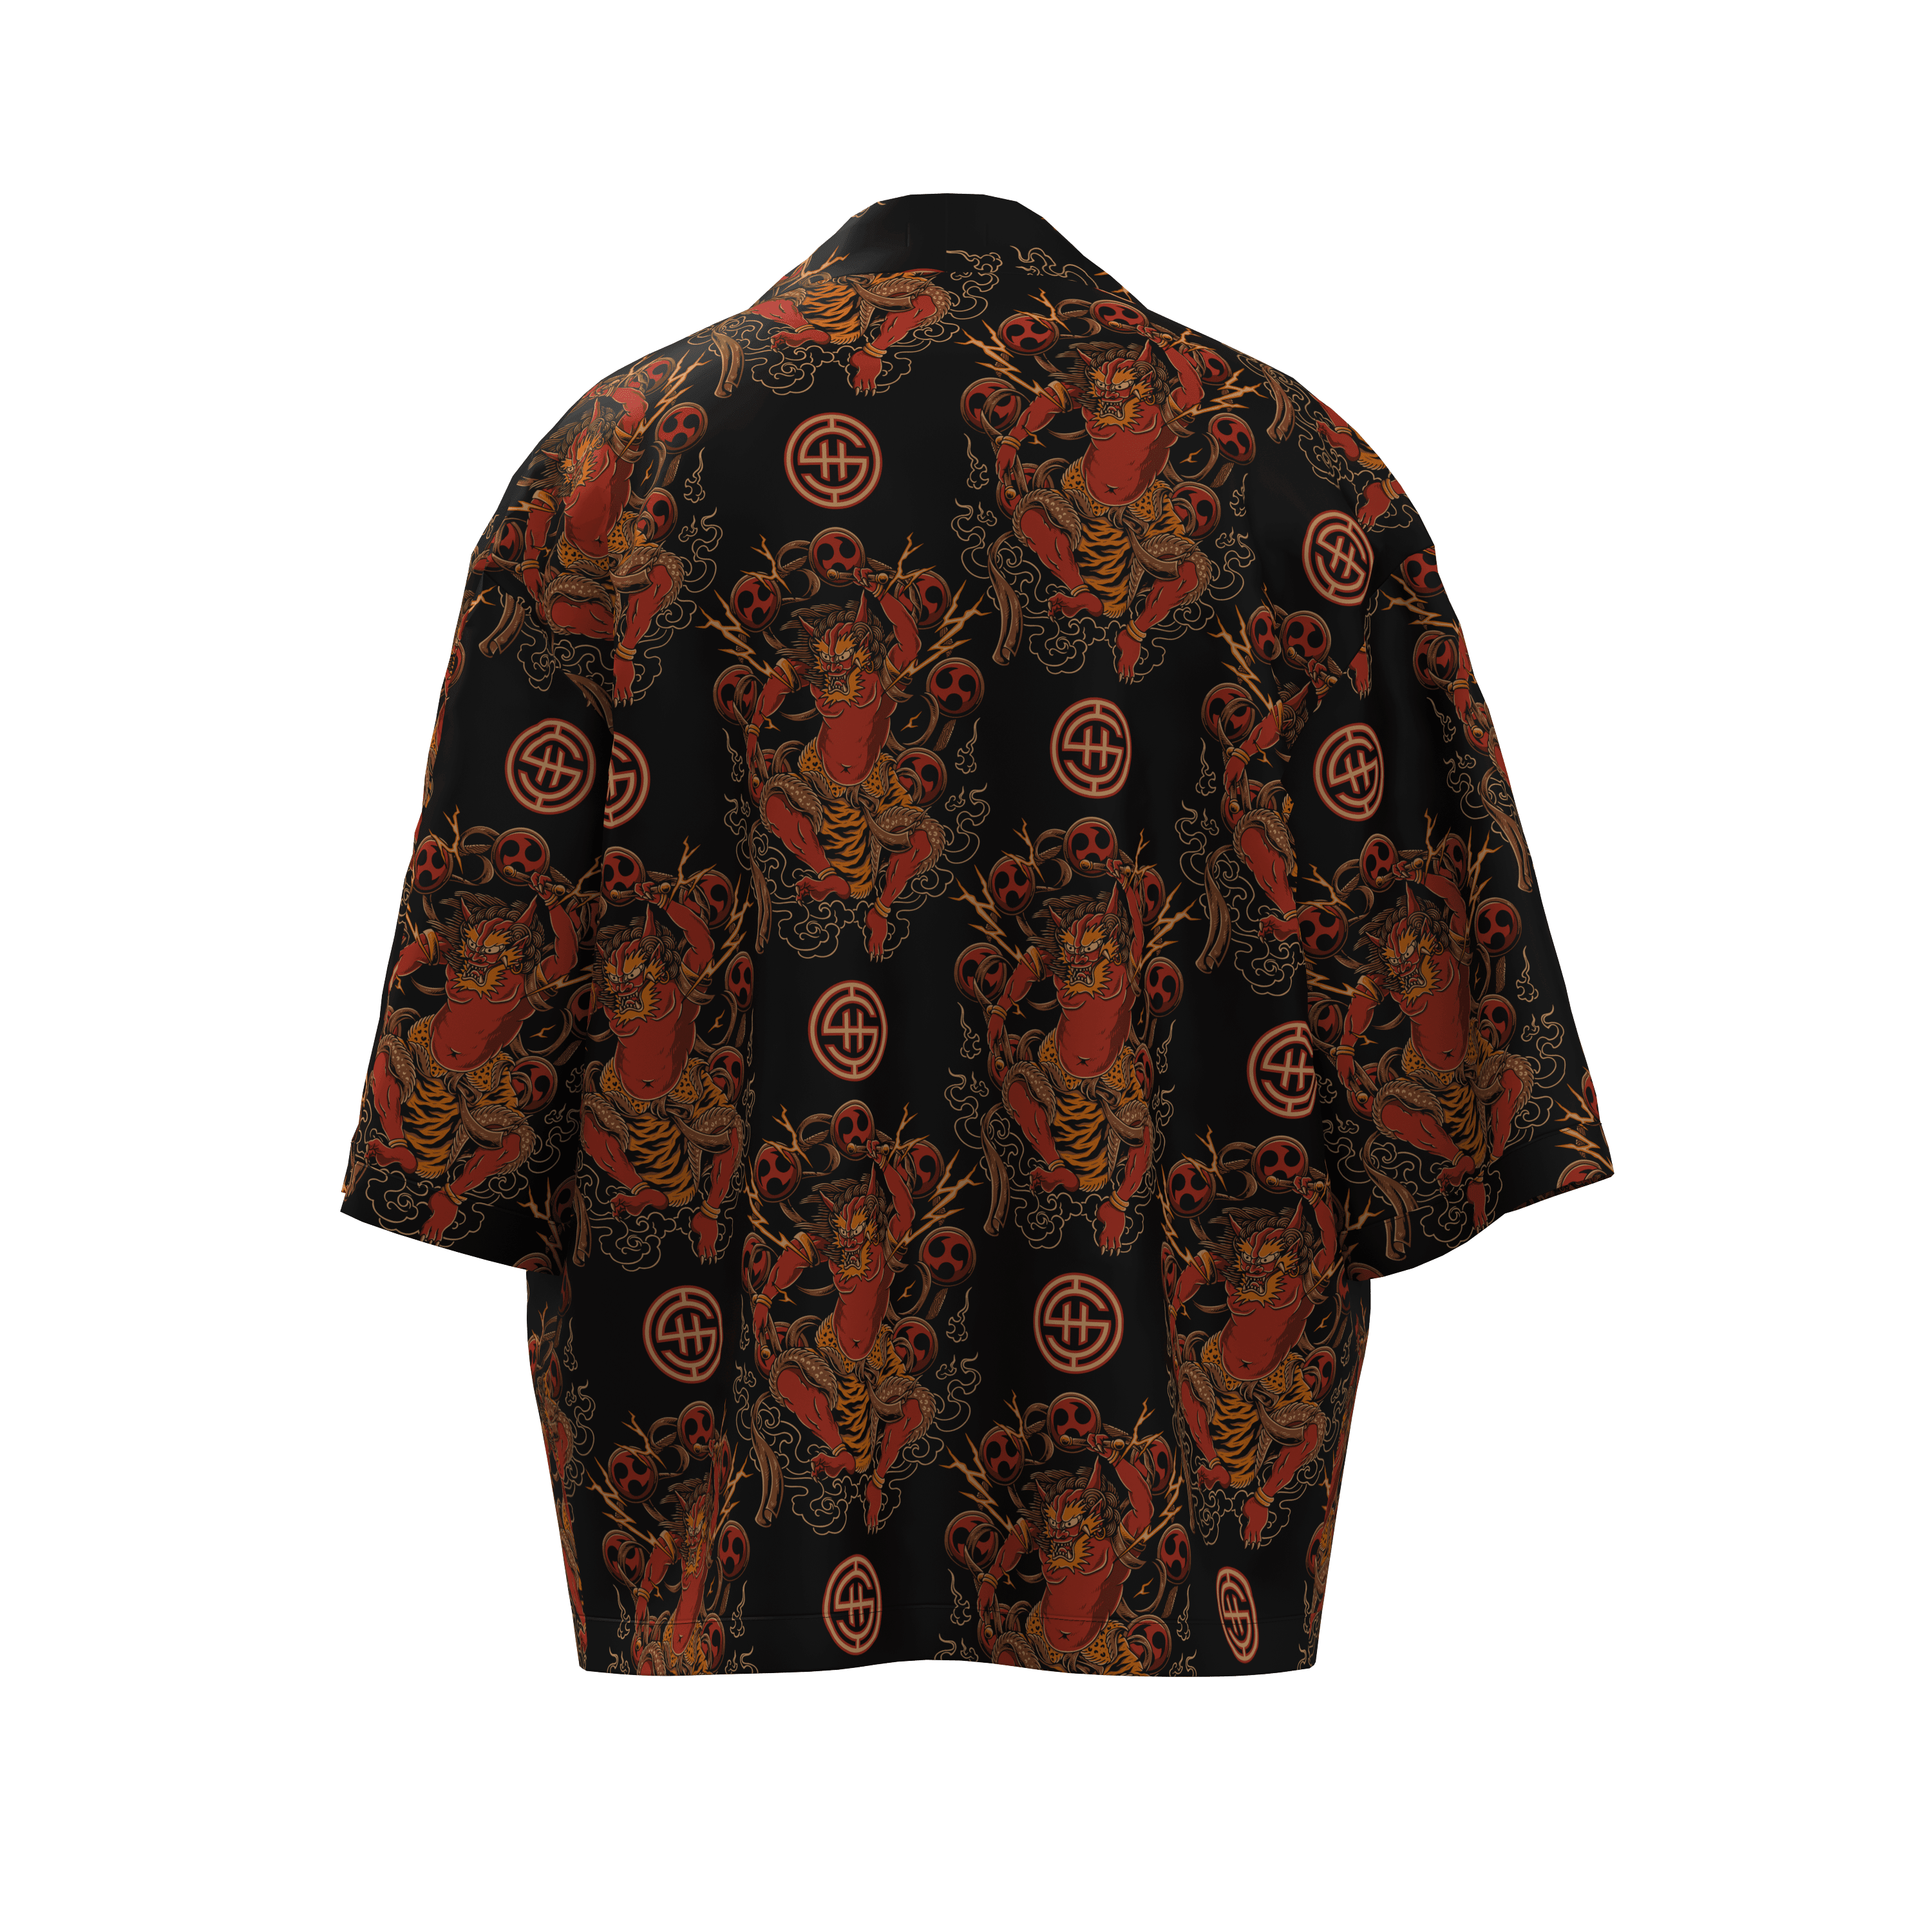 Shout Oversize Kaminari Limited Edition Unisex Kimono